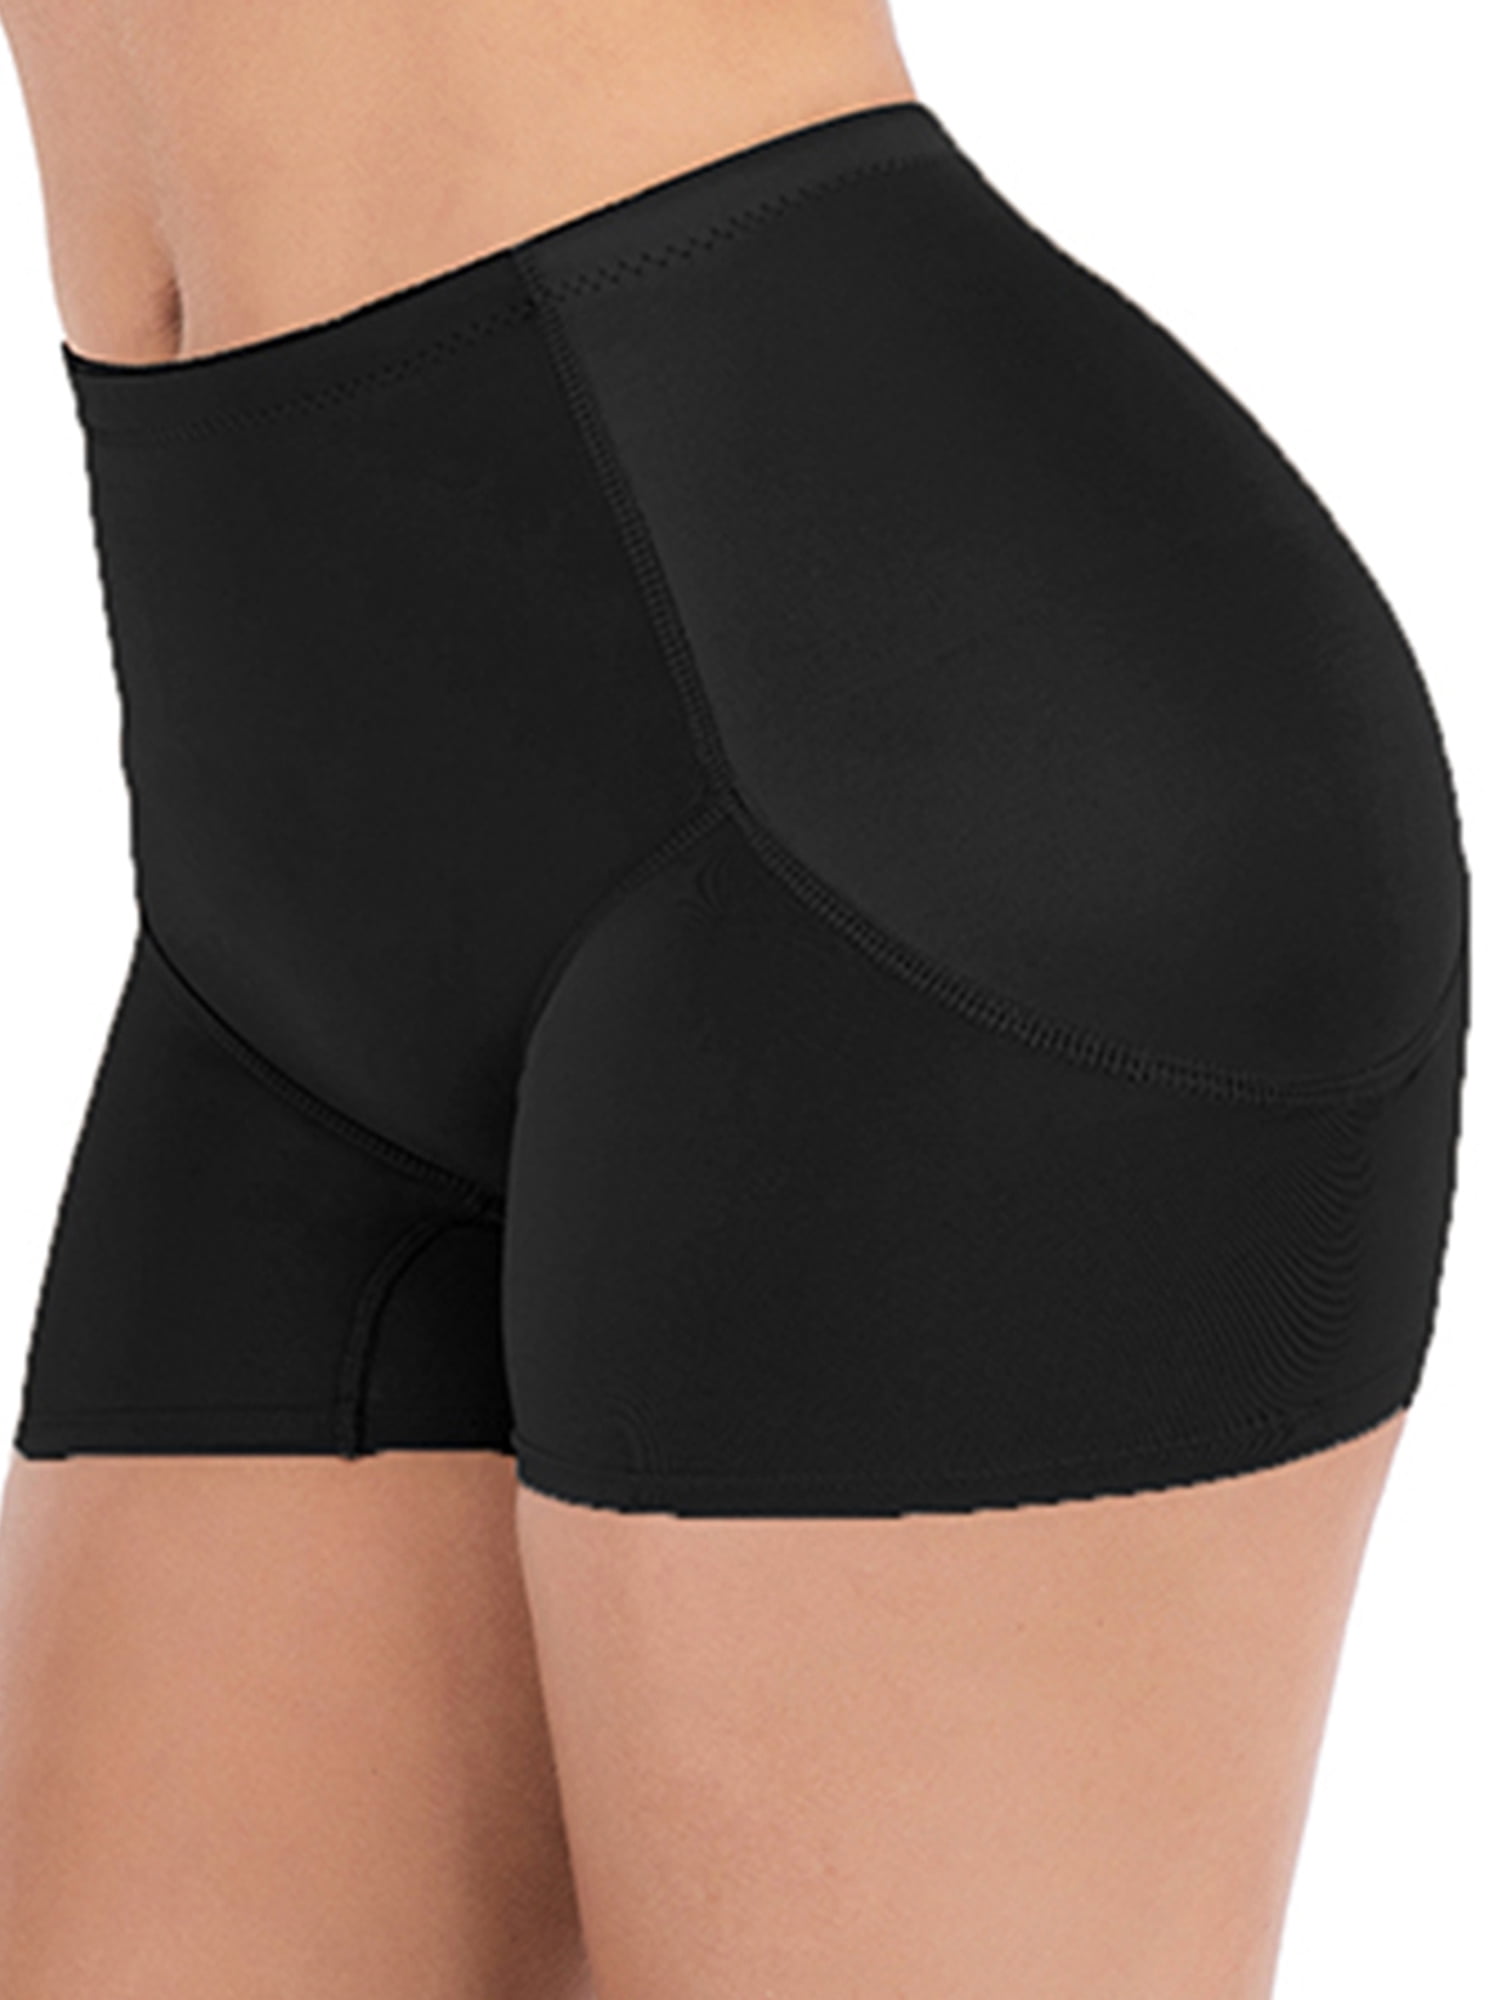 FEESHOW Women Reusable Butt Pads Removable Fake Butt Lifter Shapewear Padded Hip Enhancer Sponge Pads